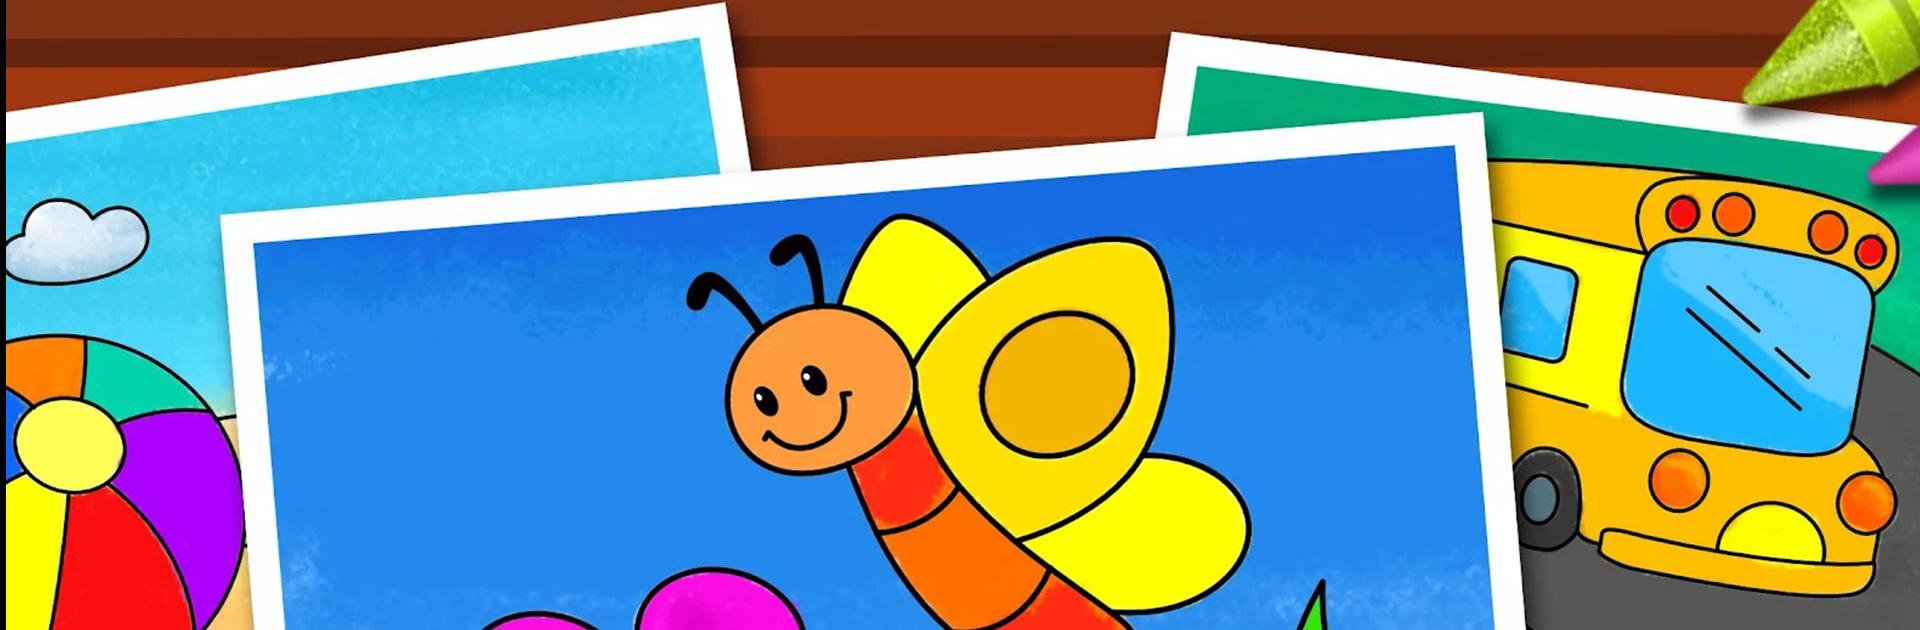 Jogos infantis: 3-7 anos - Microsoft Apps